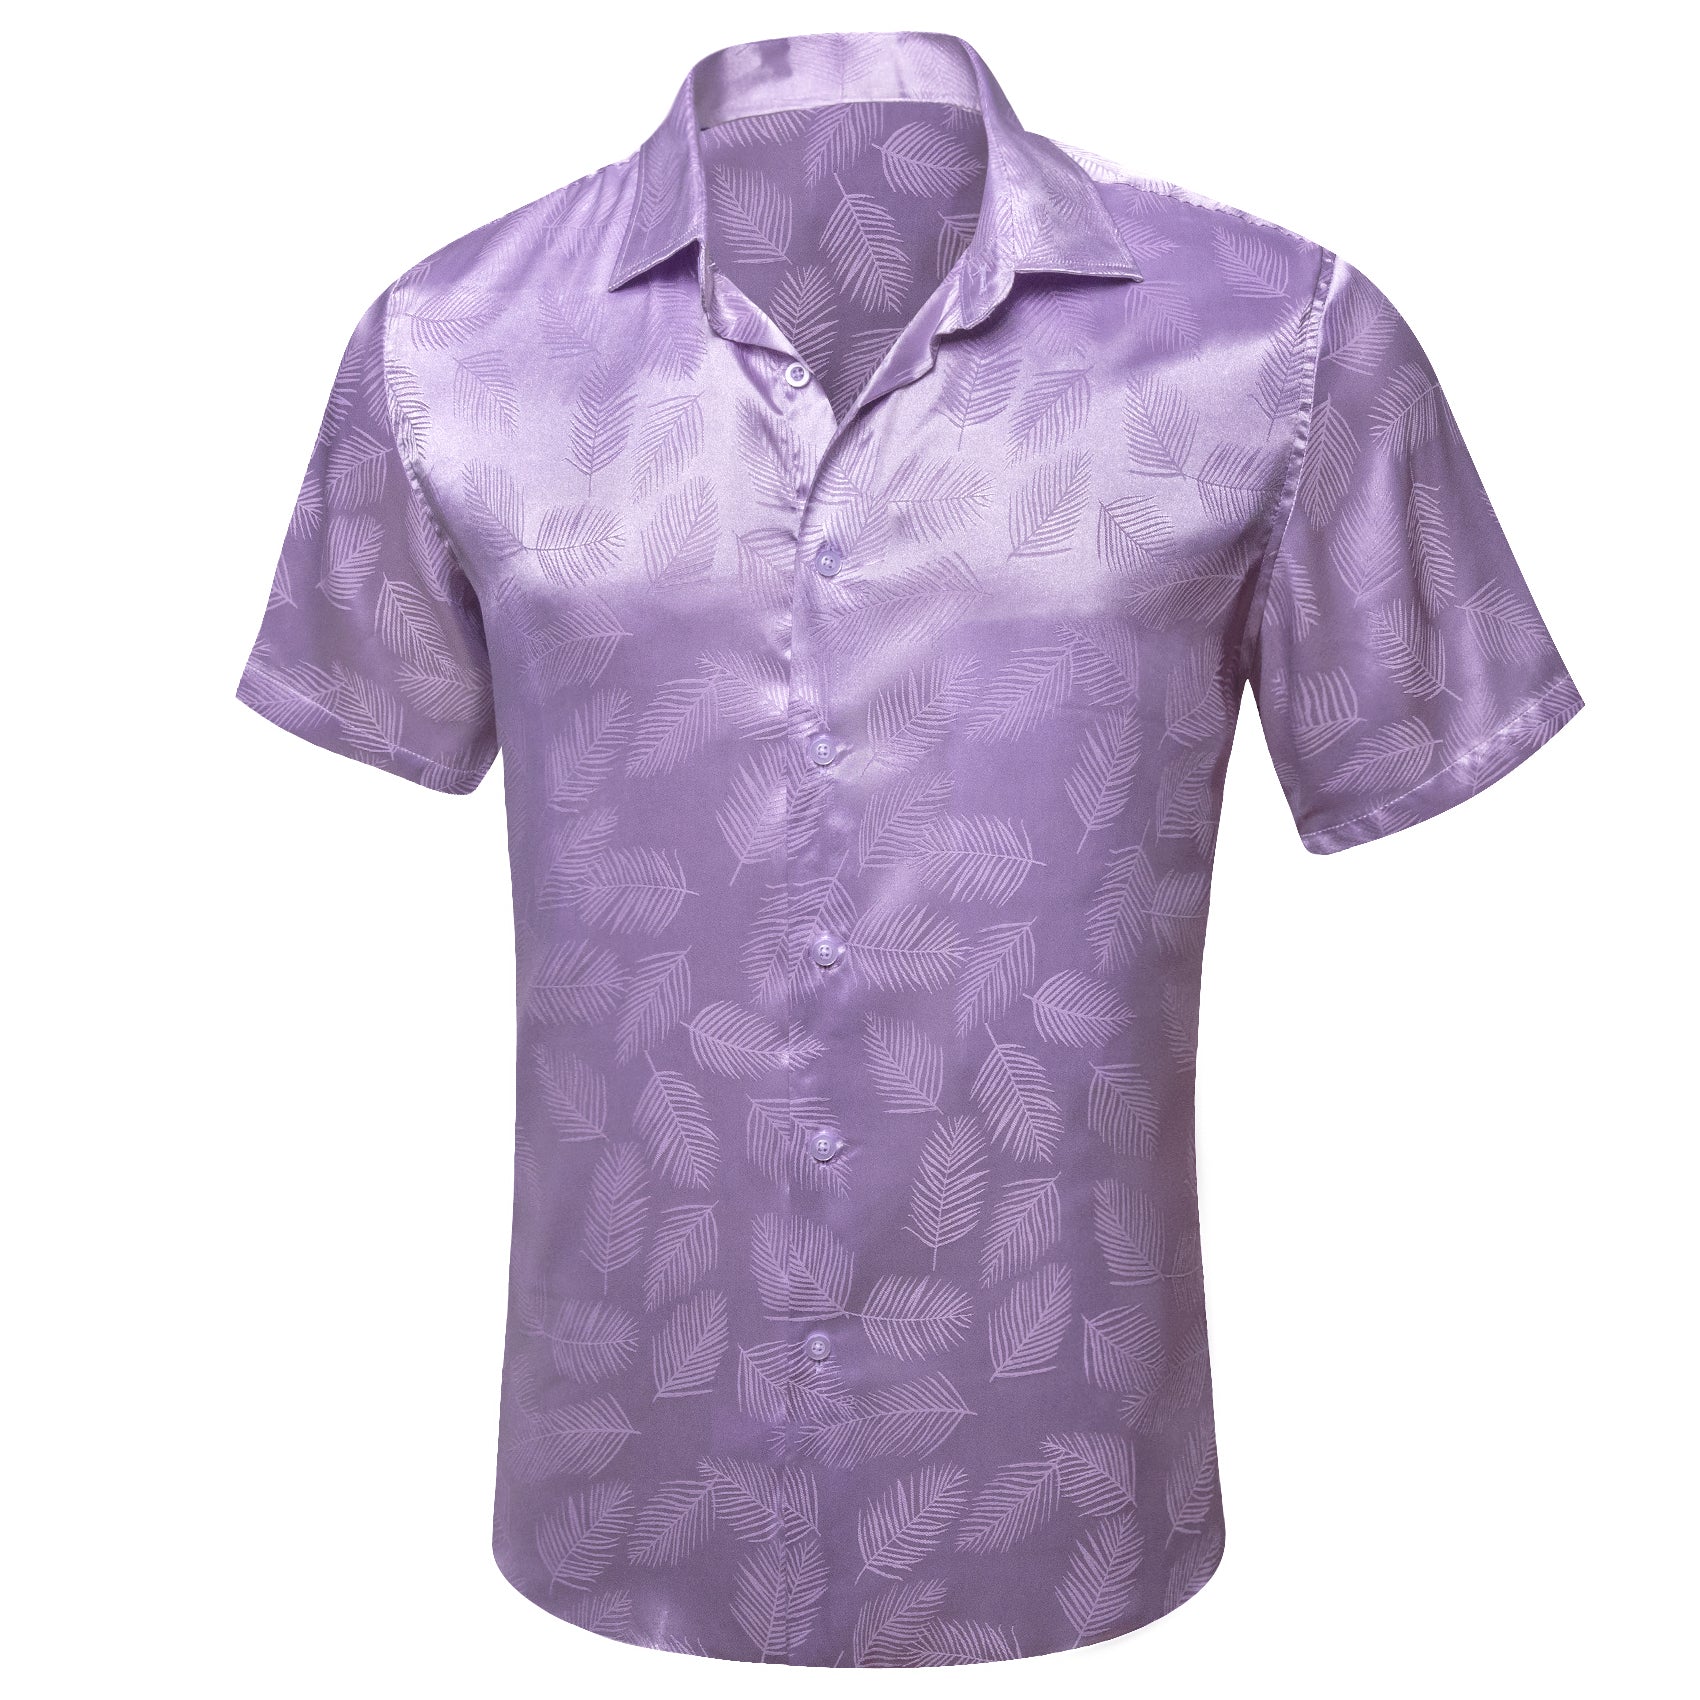 Barry.wang Purple Feather Short Sleeves Shirt